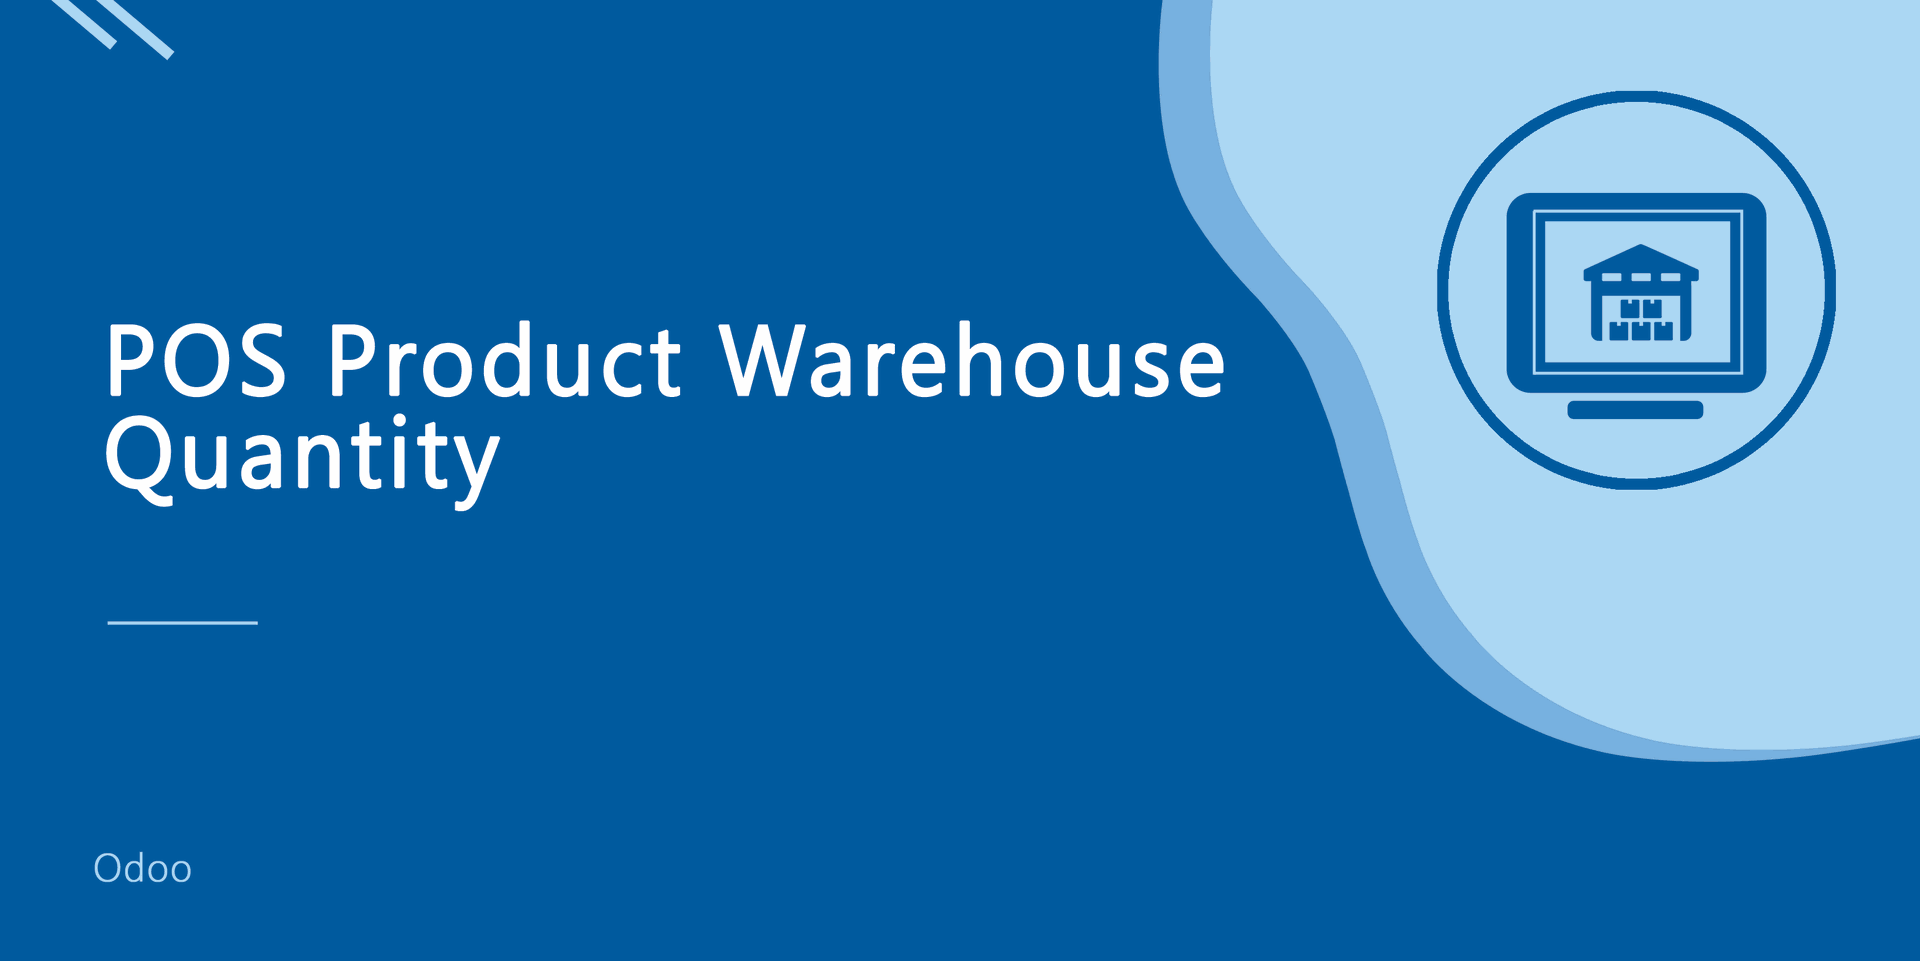 POS Product Warehouse Quantity